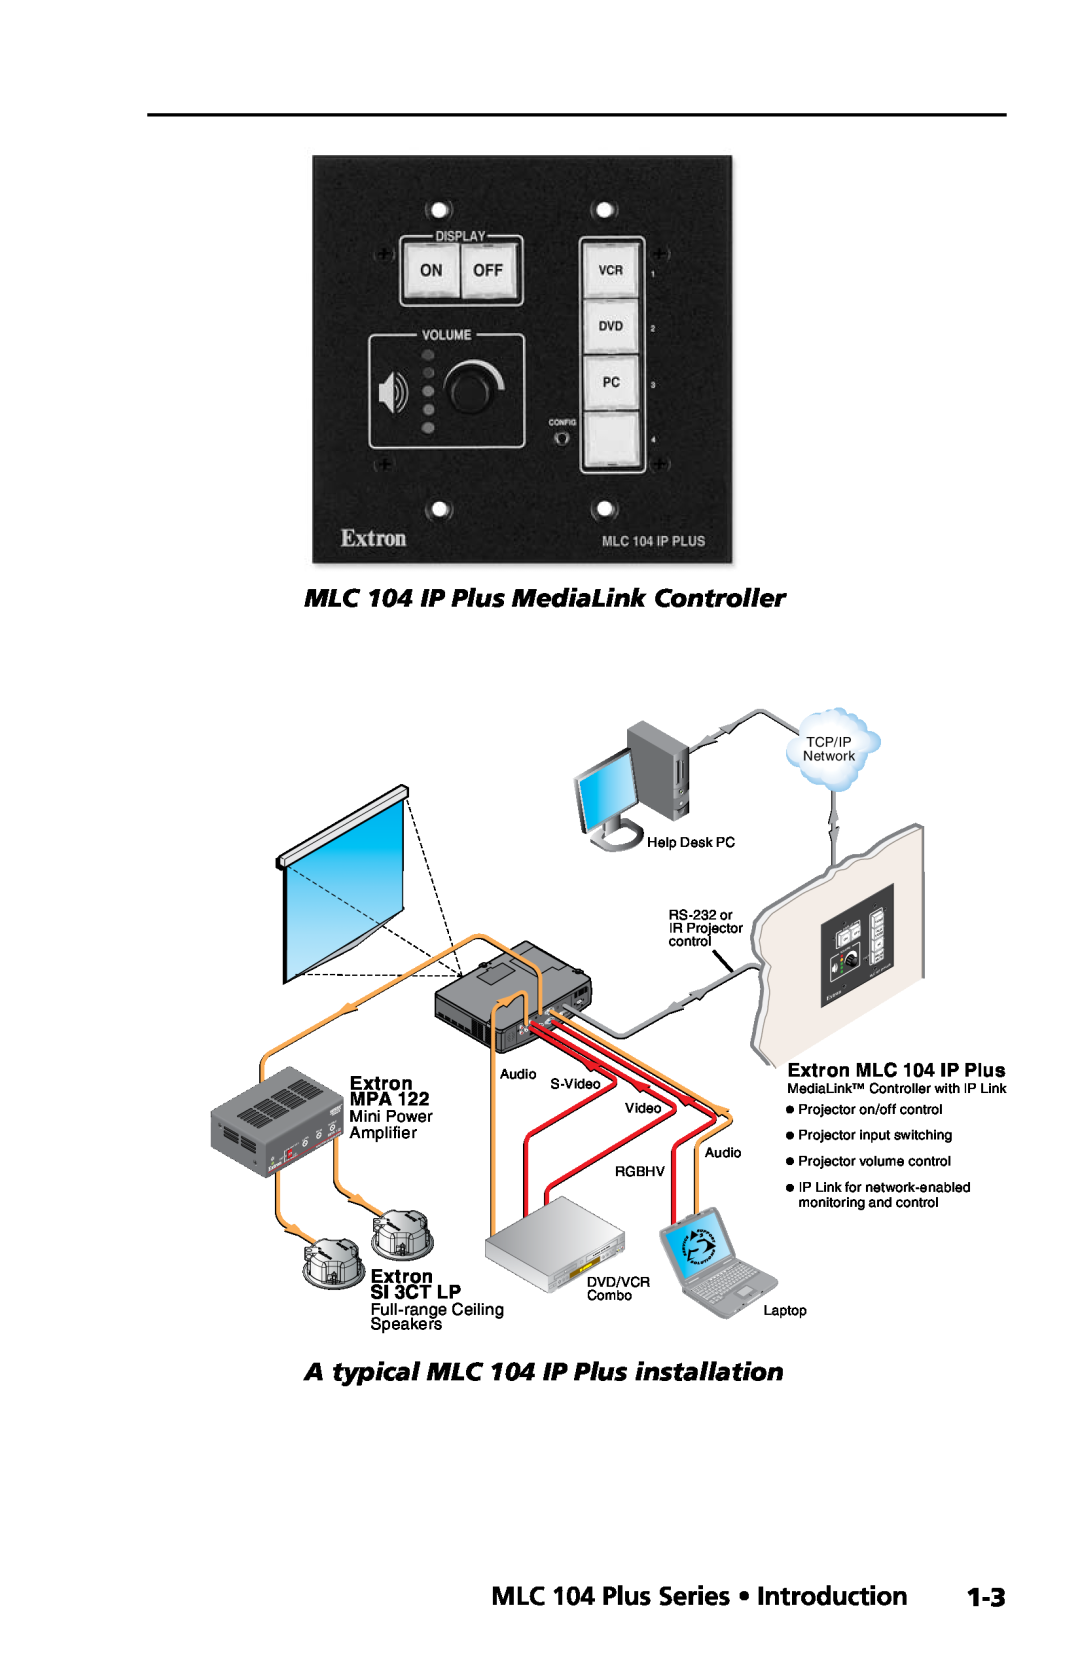 Extron electronic MLC 104 Plus Series Introduction, MLC 104 IP Plus MediaLink Controller, Mini Power, Amplifier 